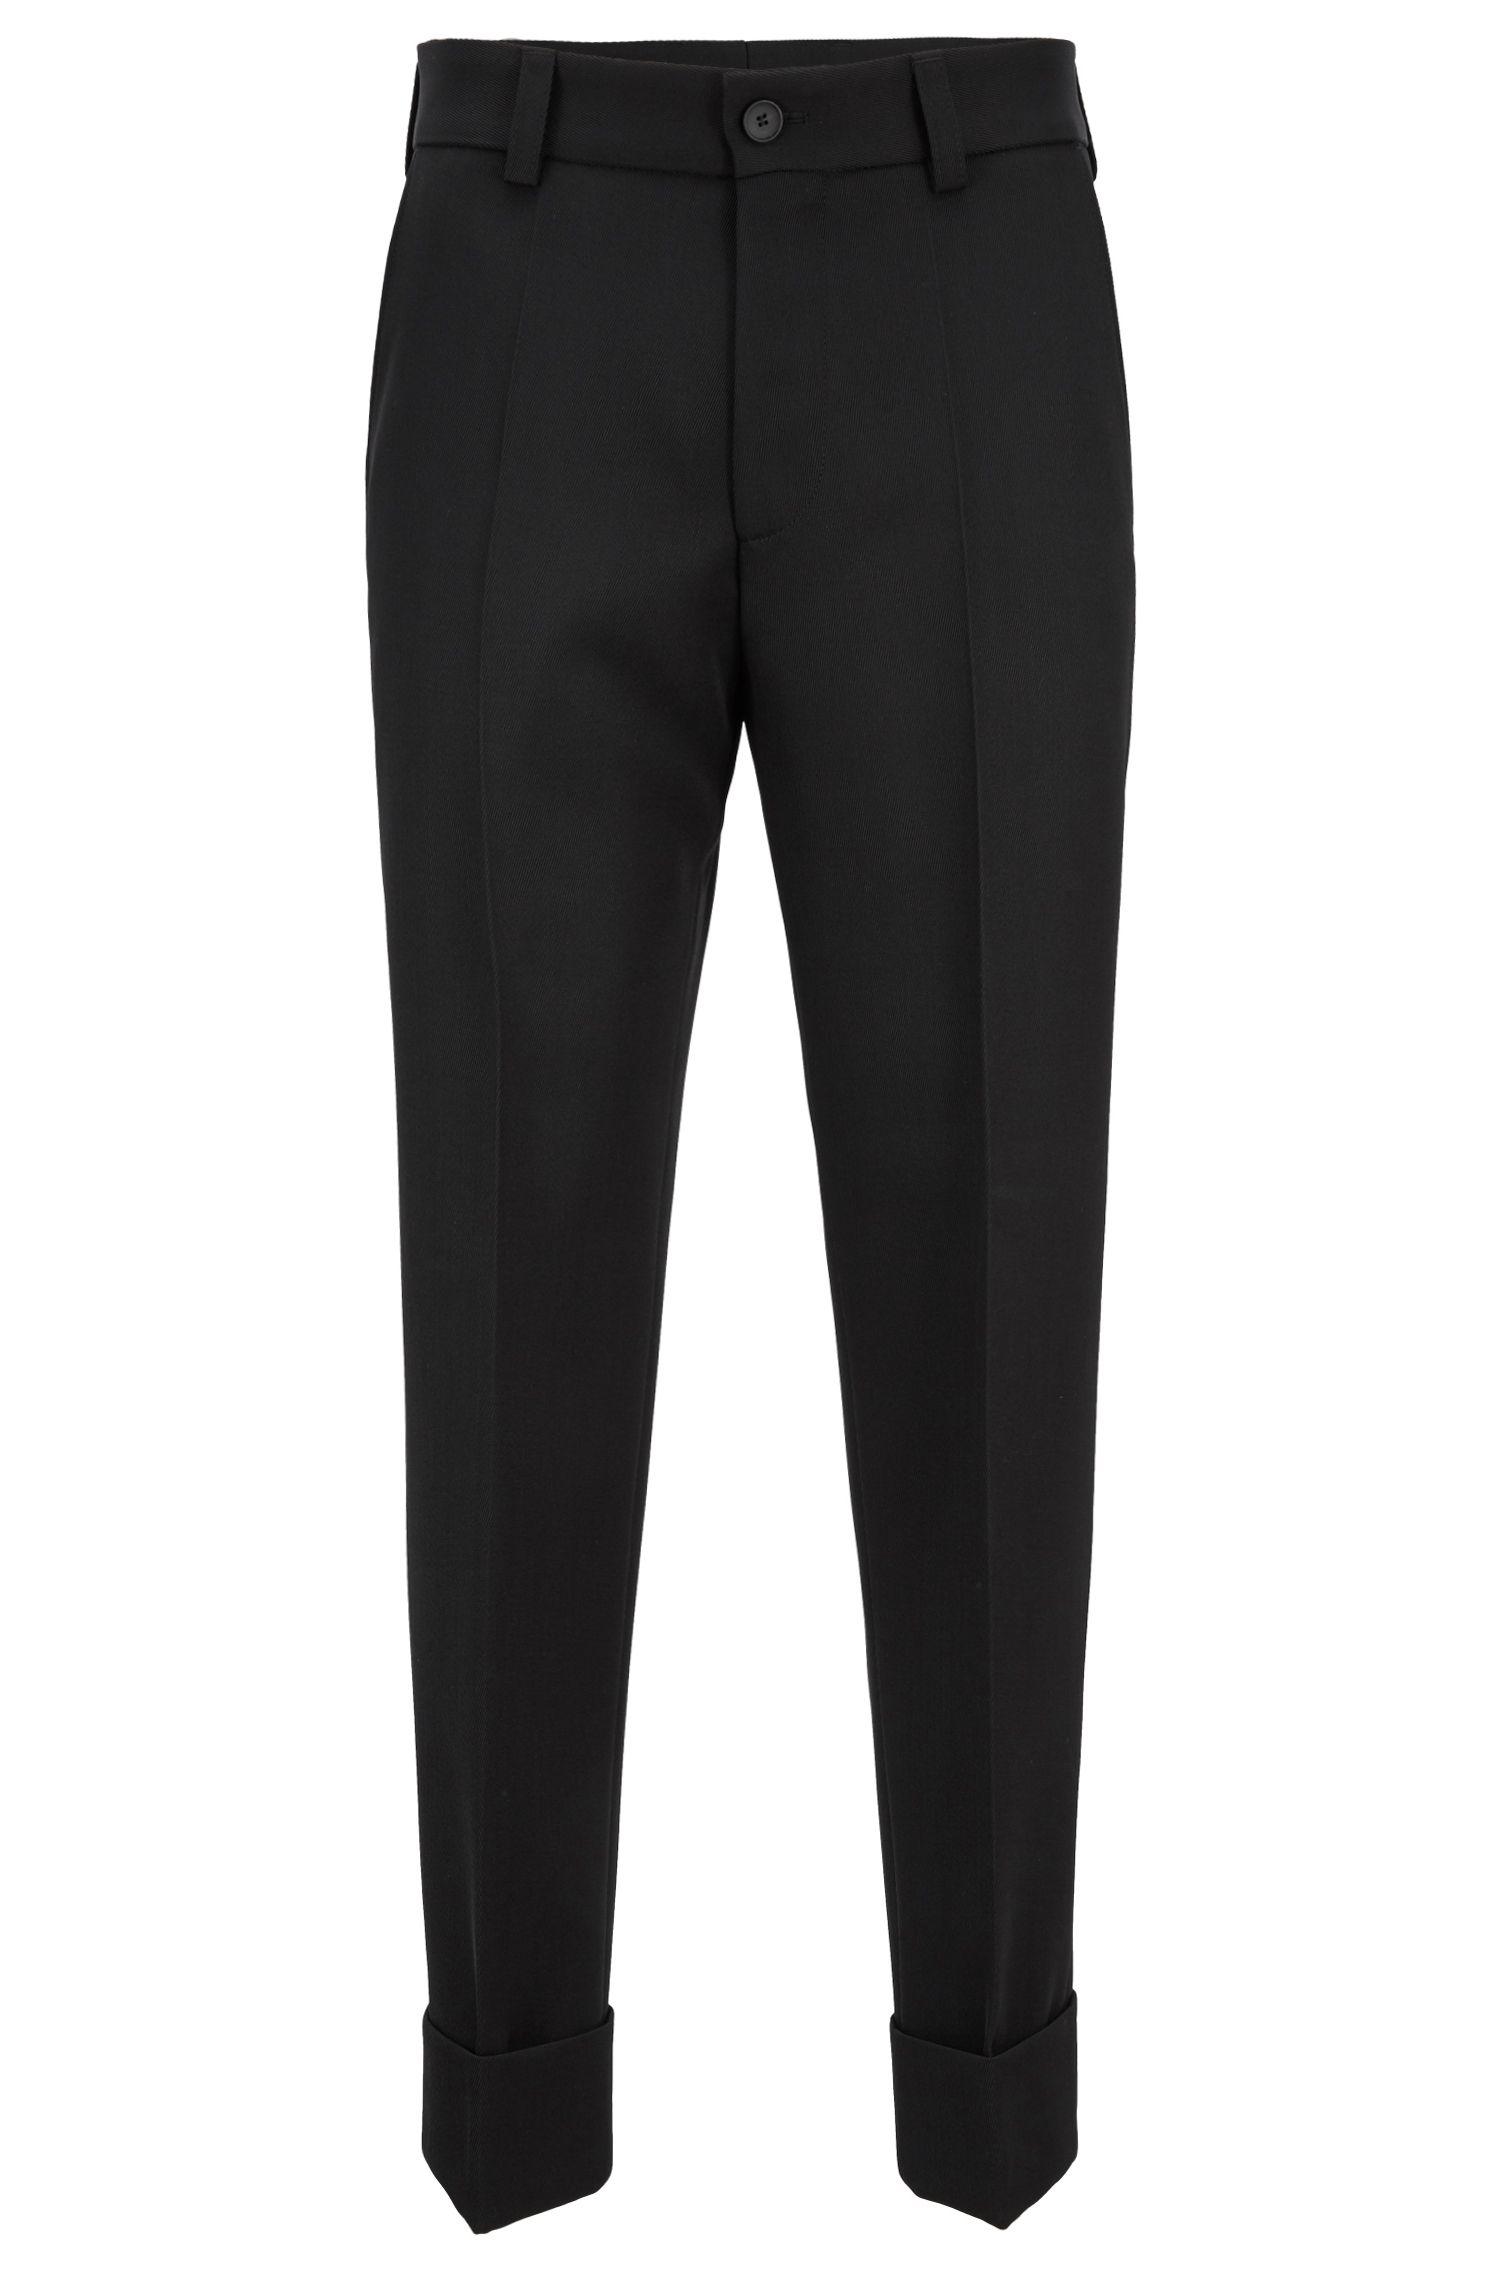 Lyst - BOSS Relaxed-fit Cropped Trousers In Virgin Wool in Black for Men